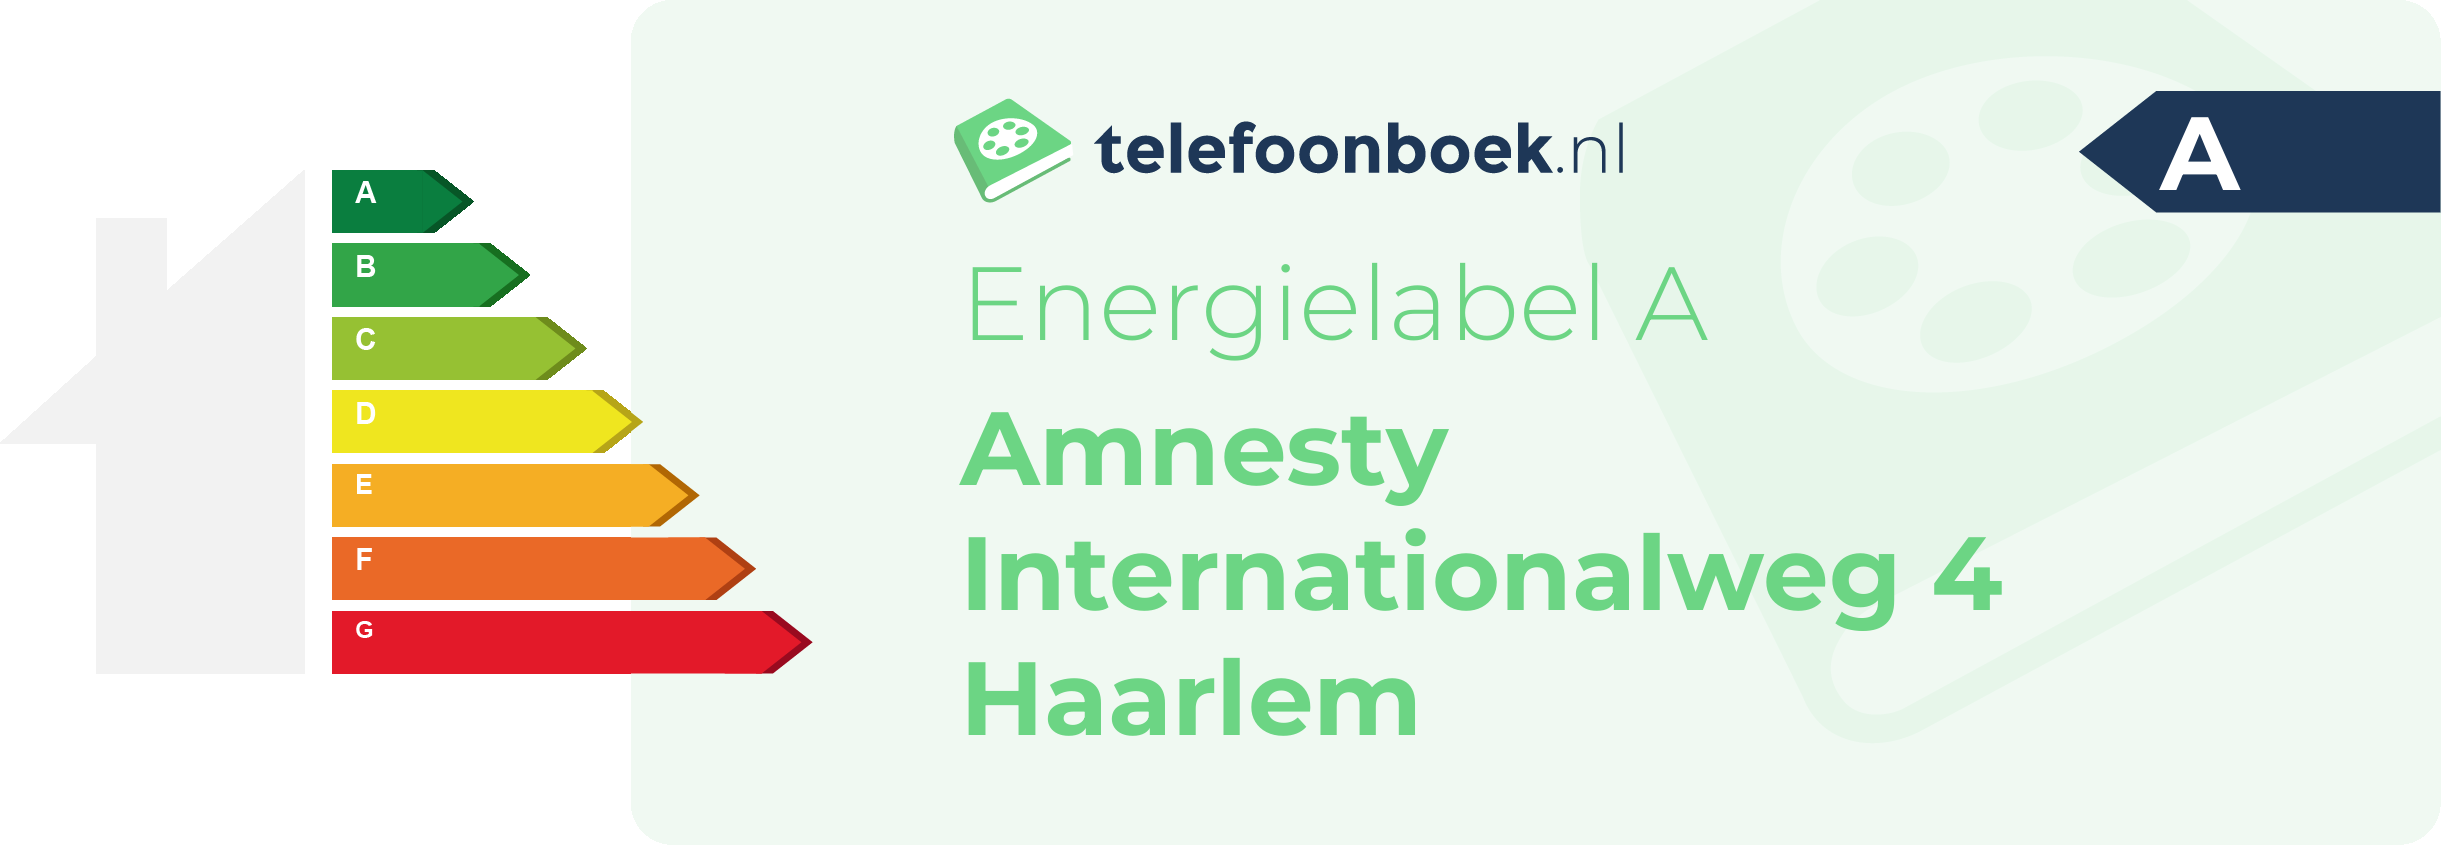 Energielabel Amnesty Internationalweg 4 Haarlem